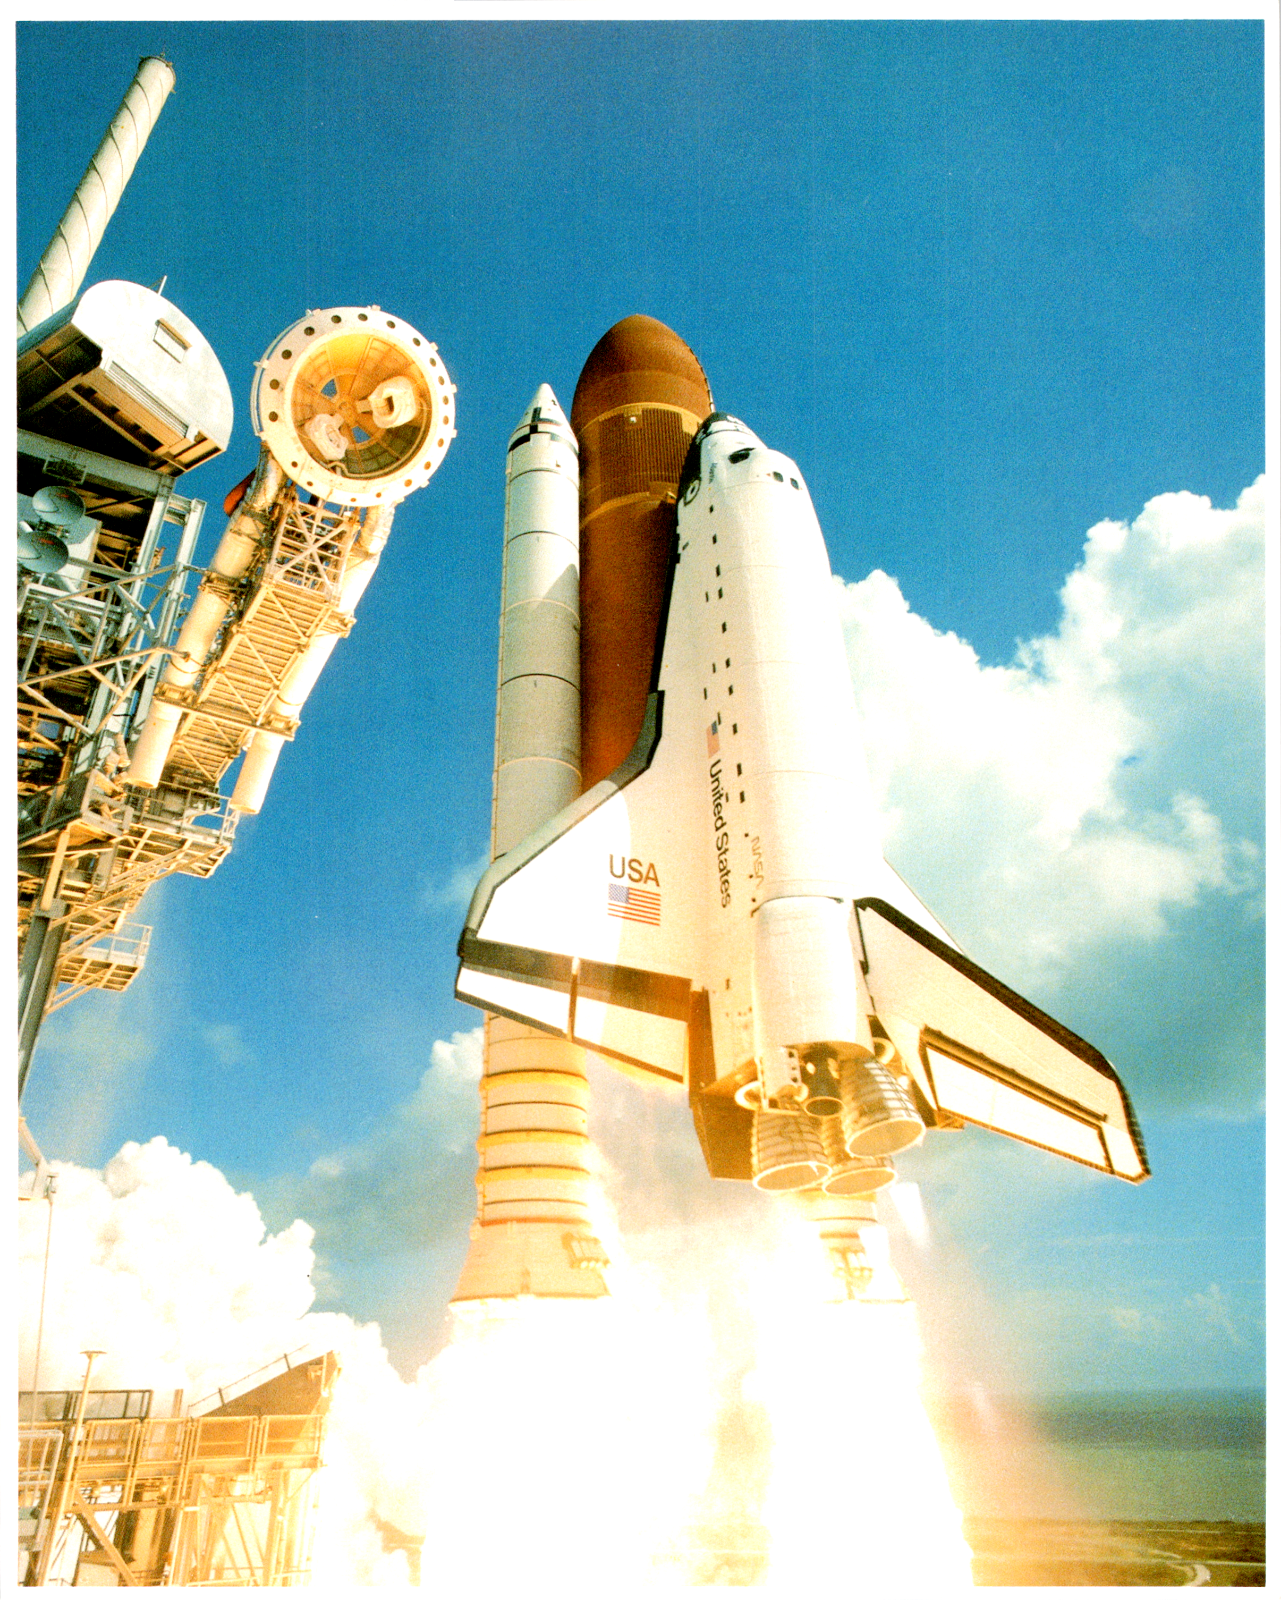 Space Shuttle Atlantis Lift off 8x10 Color Photo in Excellent Condition